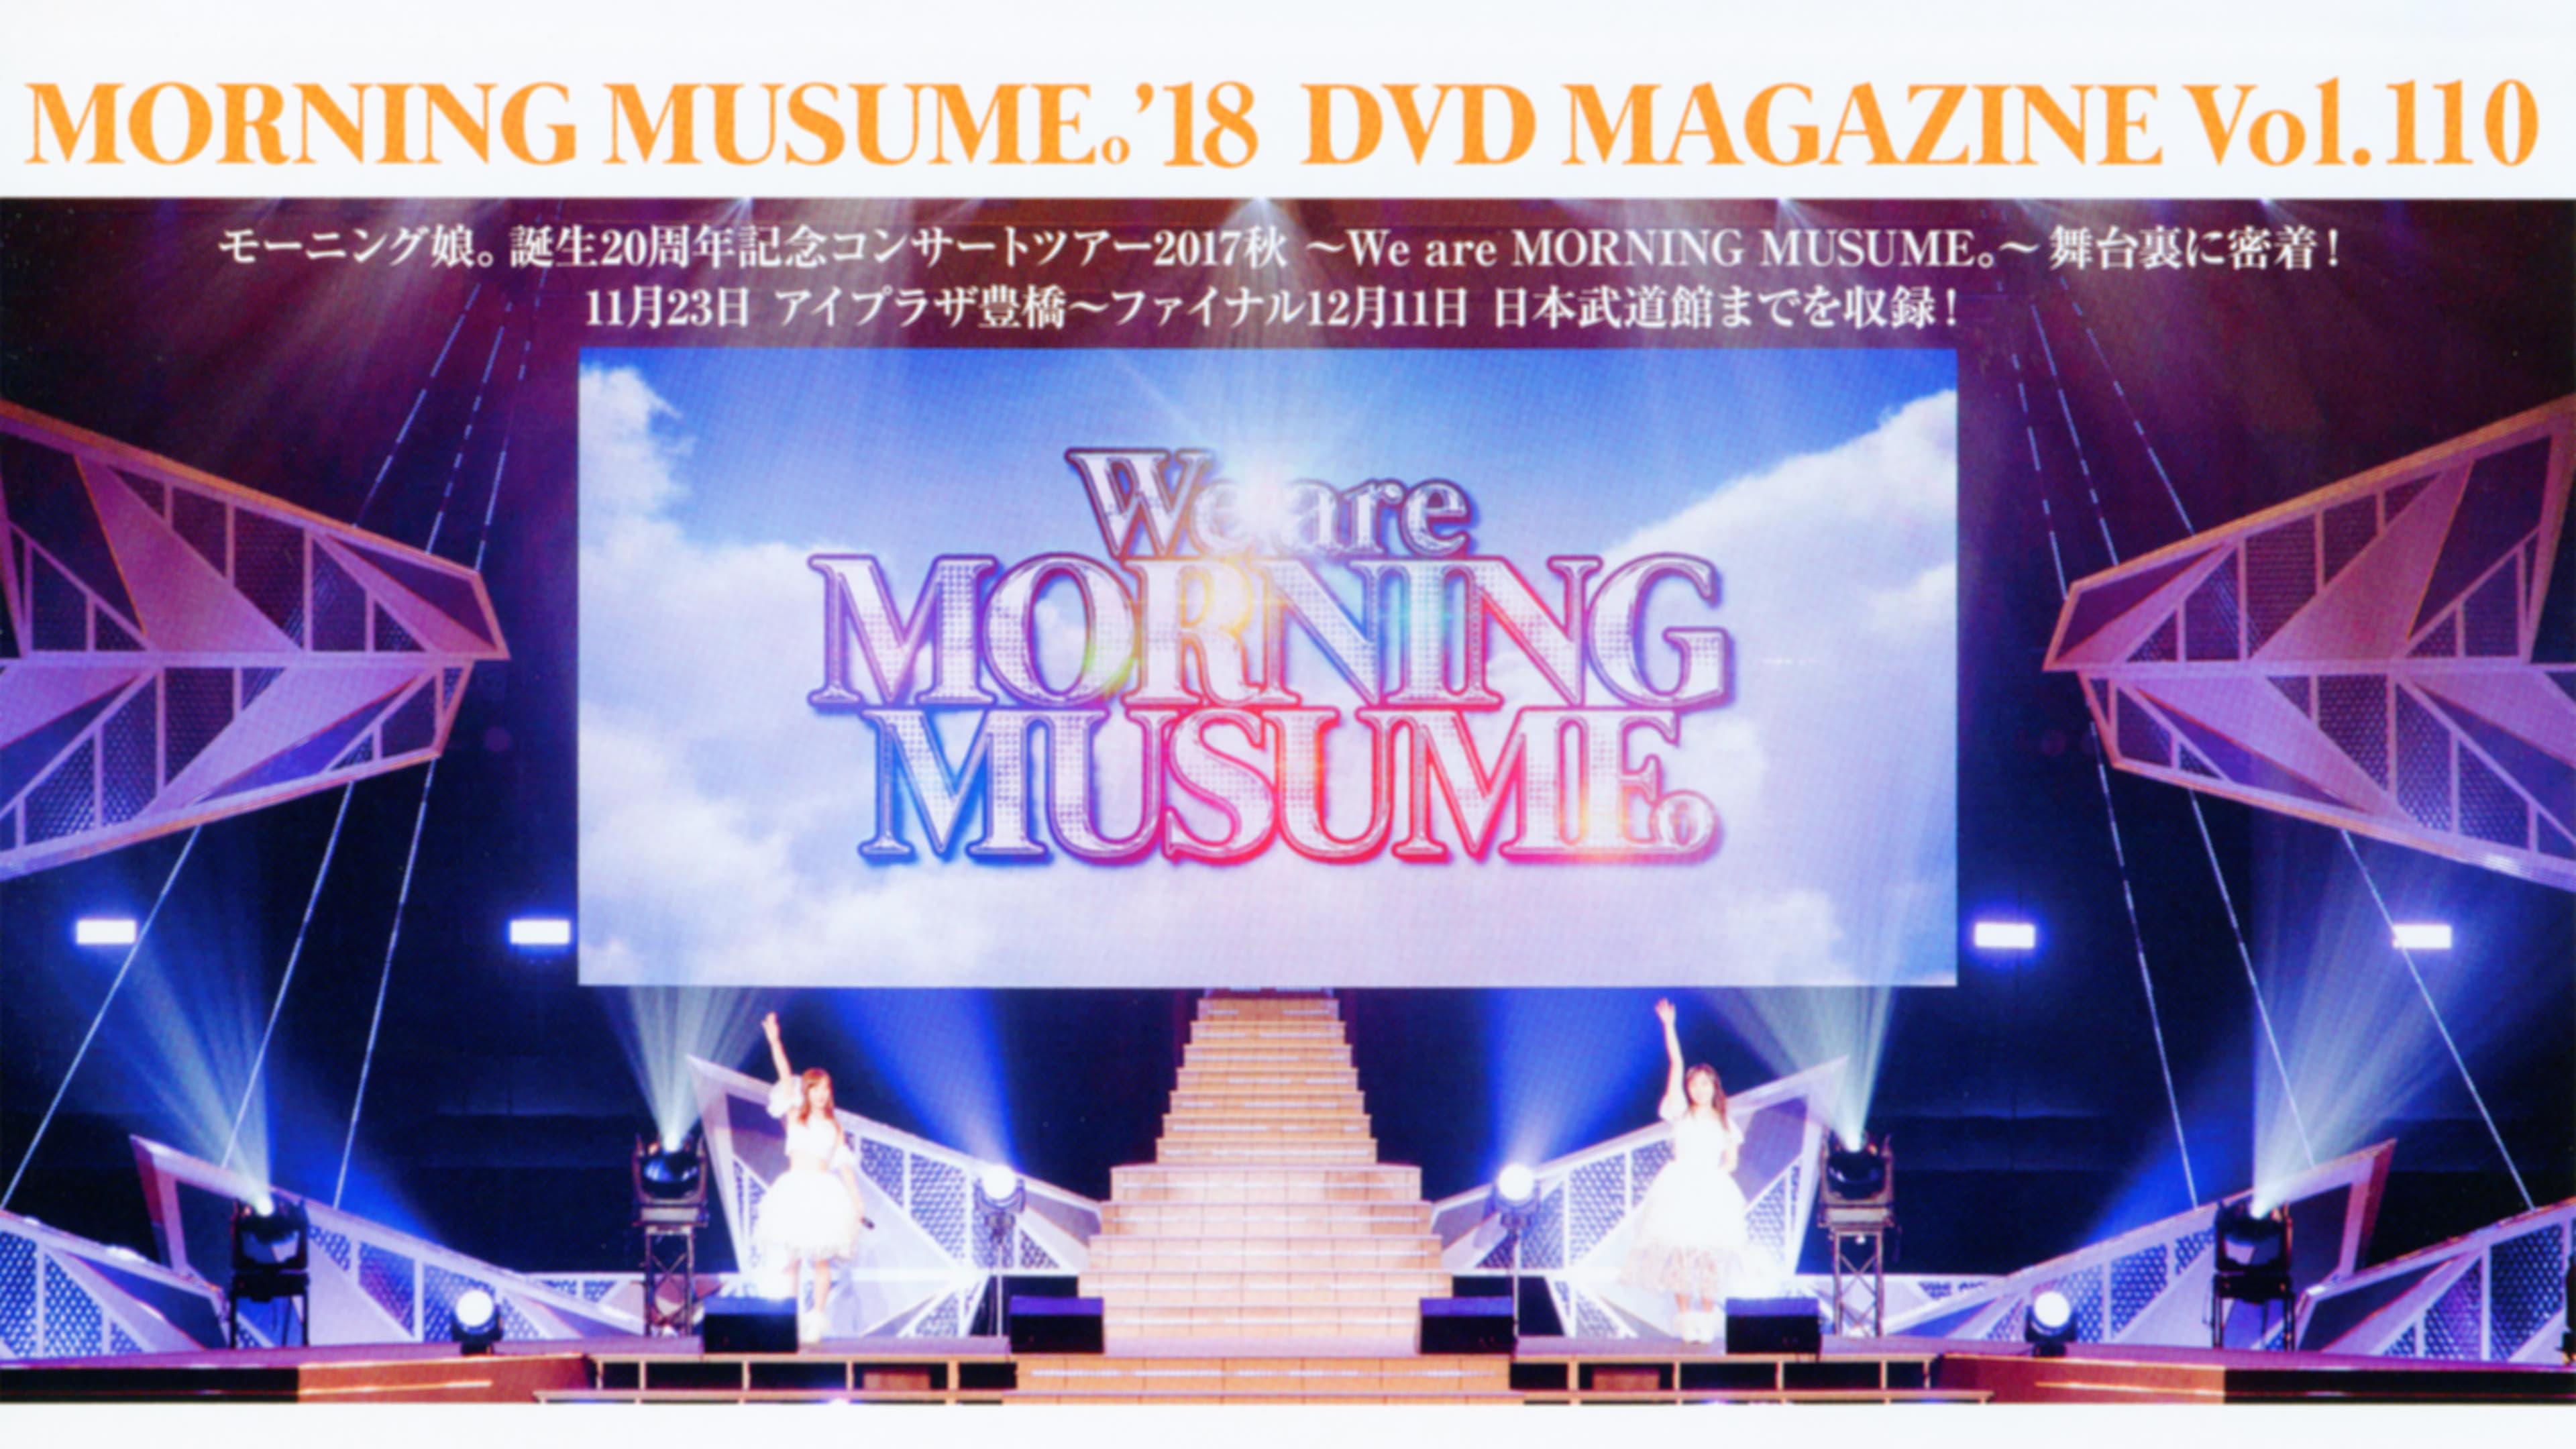 Morning Musume.'18 DVD Magazine Vol.110 backdrop